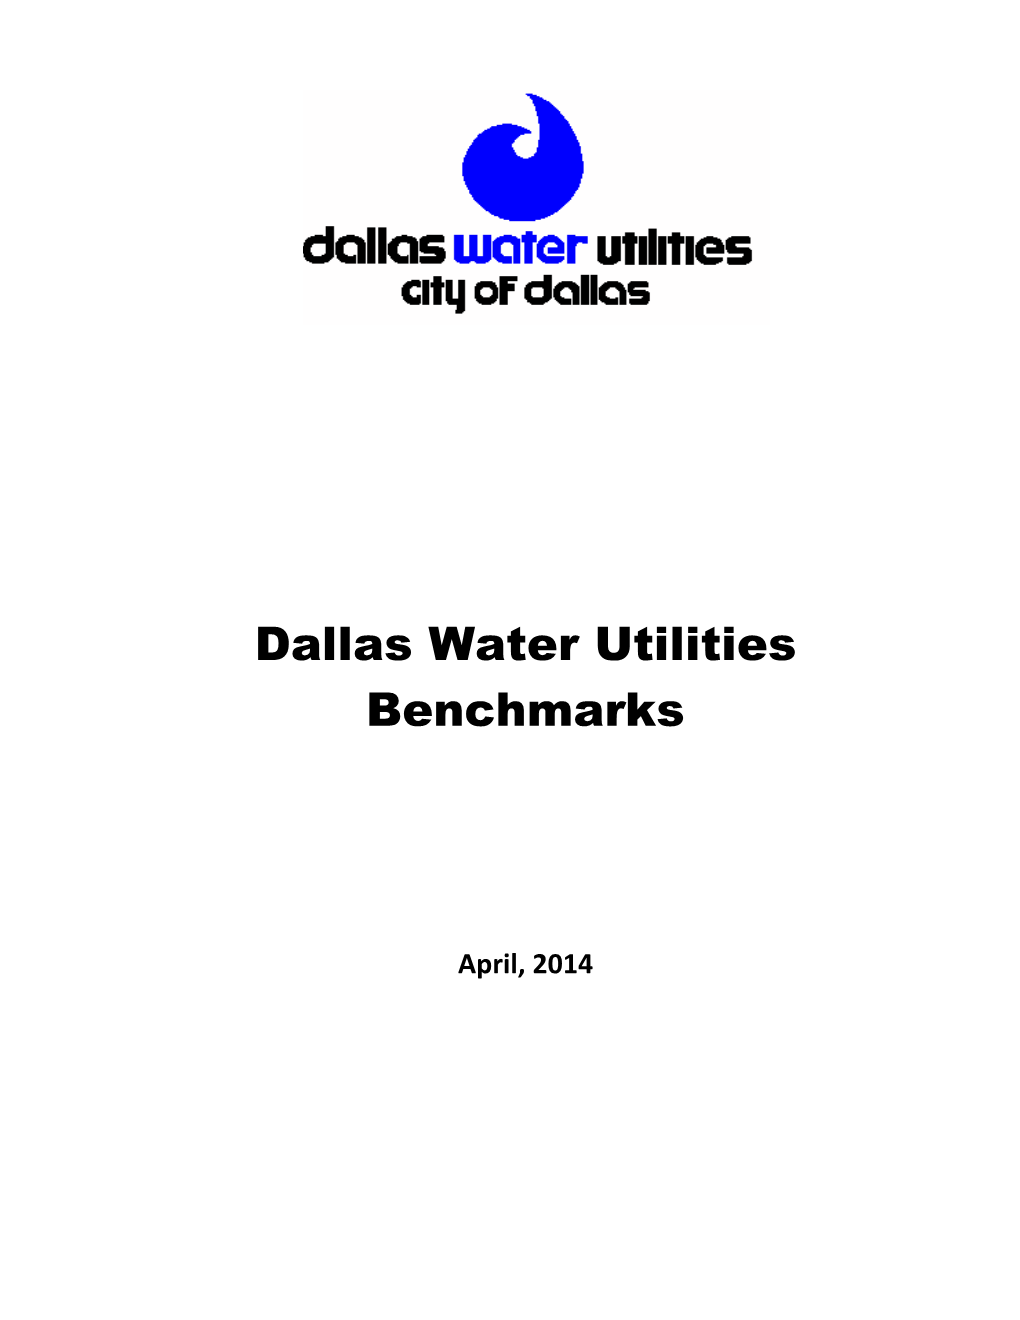 Dallas Water Utilities Benchmarks